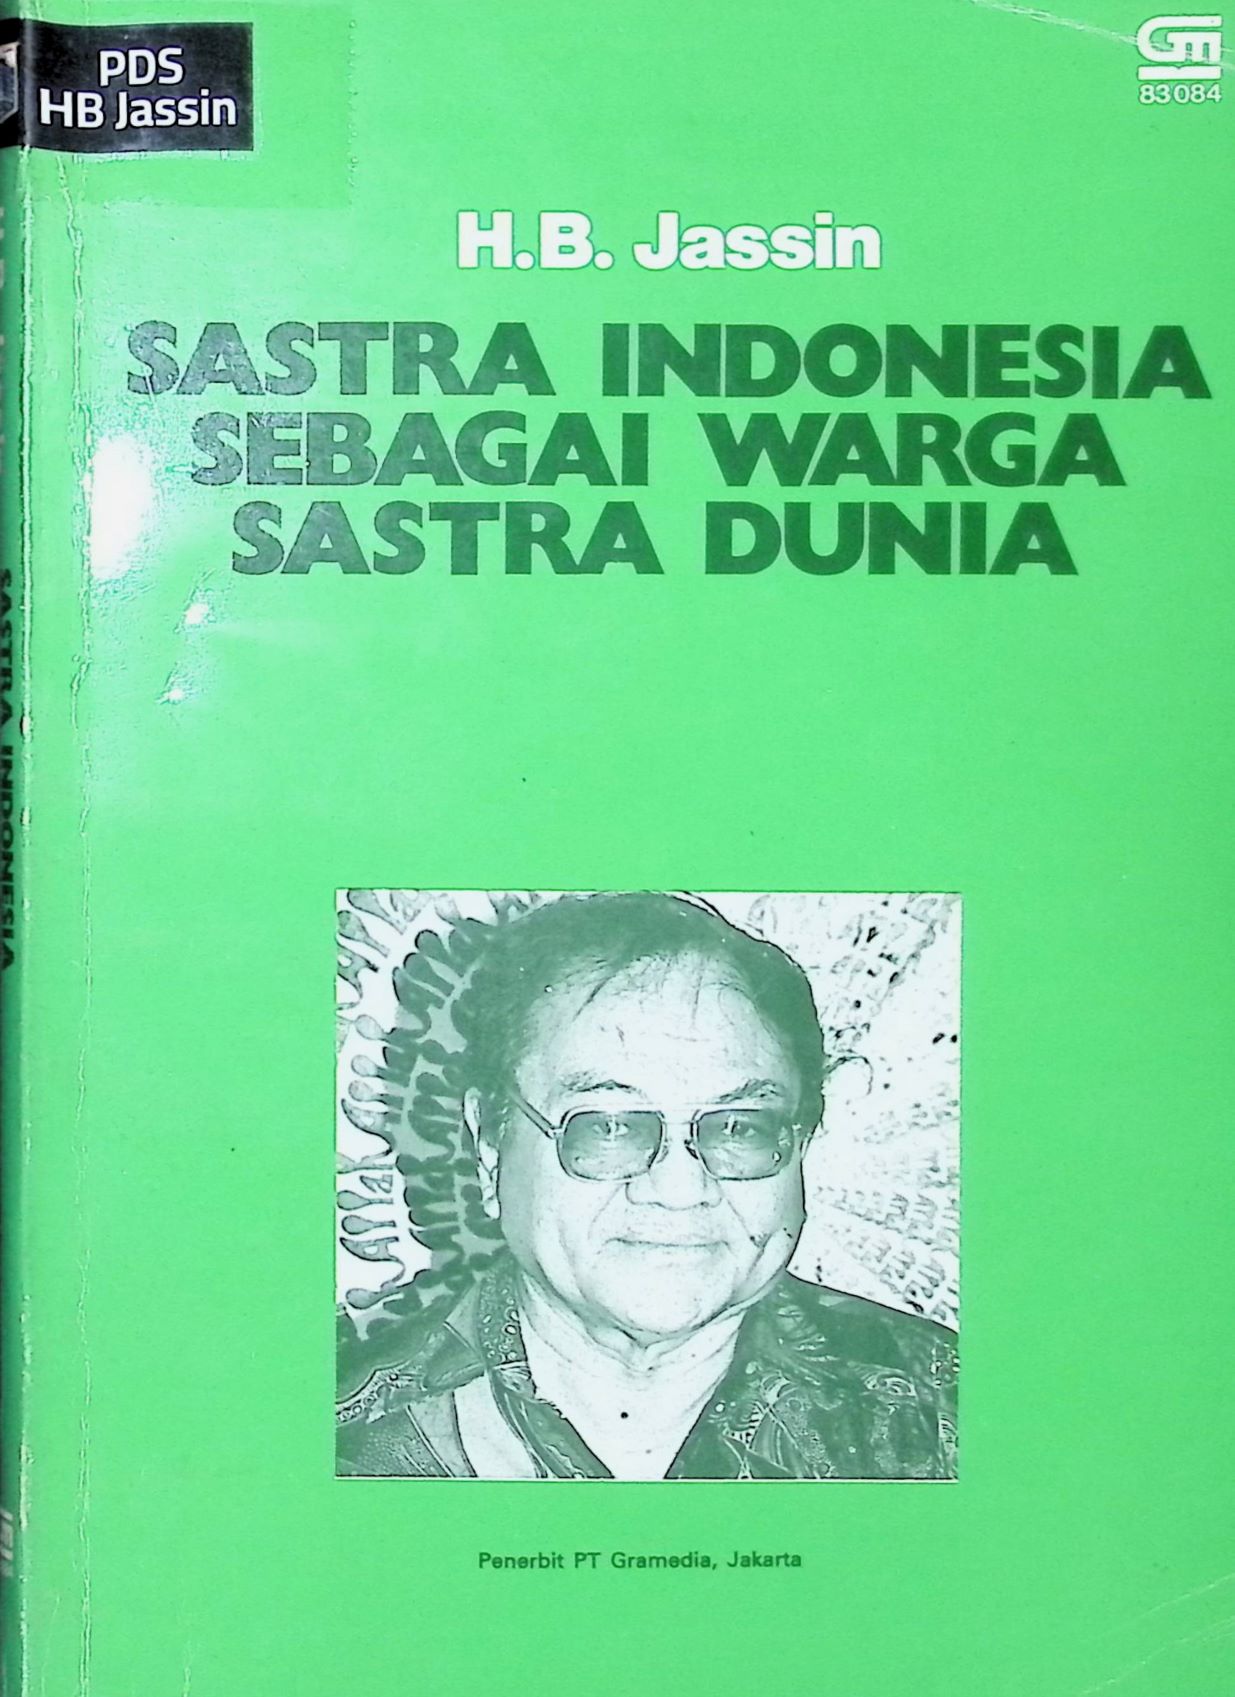 Sastra Indonesia sebagai sastra dunia